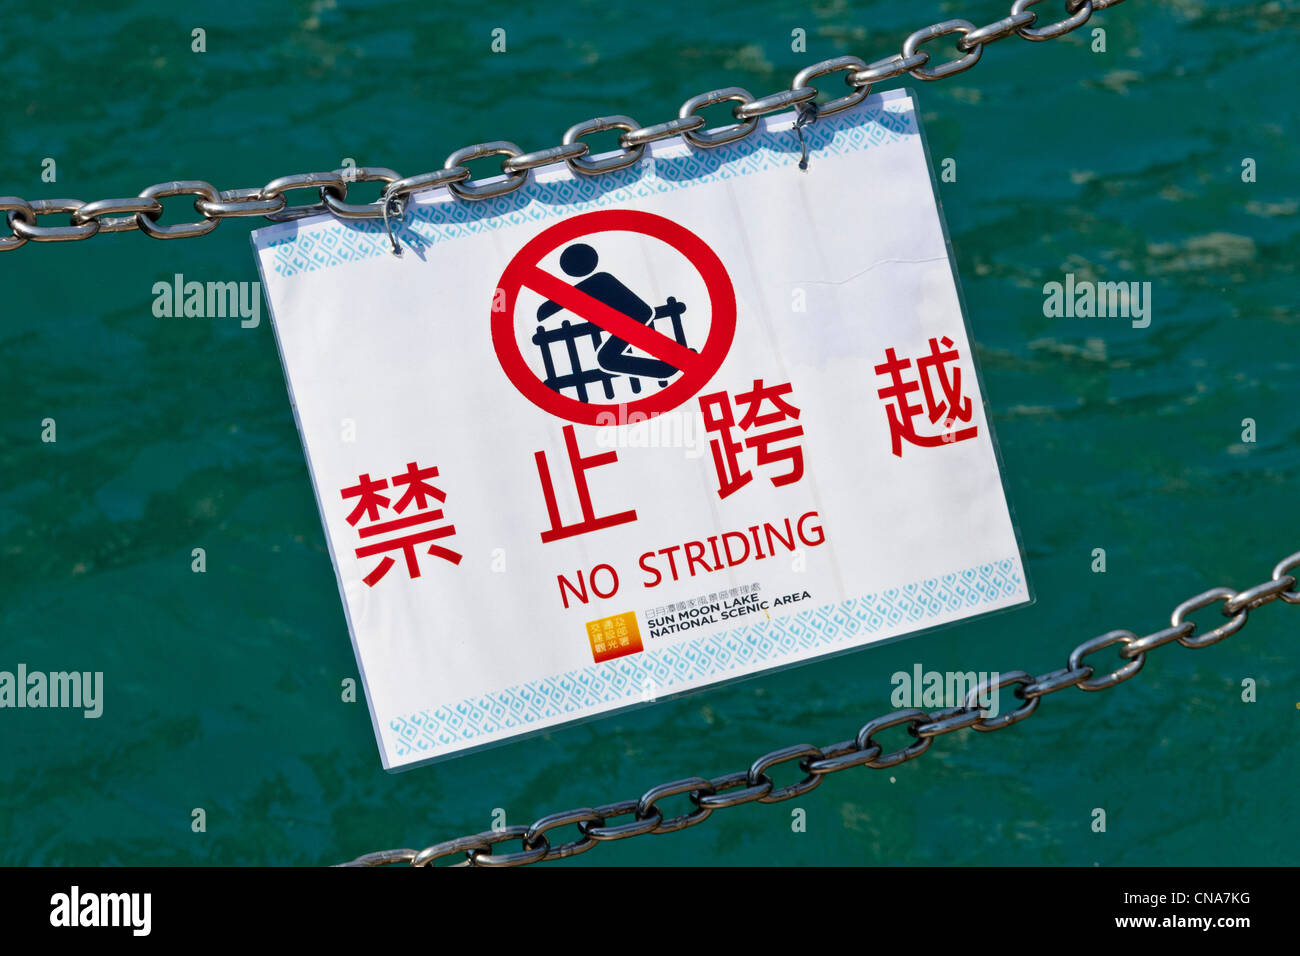 Chinglish Chinese-English sign 'No striding' ('Do not cross the barrier') at Itashao pier, Sun Moon Lake, Taiwan. JMH5830 Stock Photo